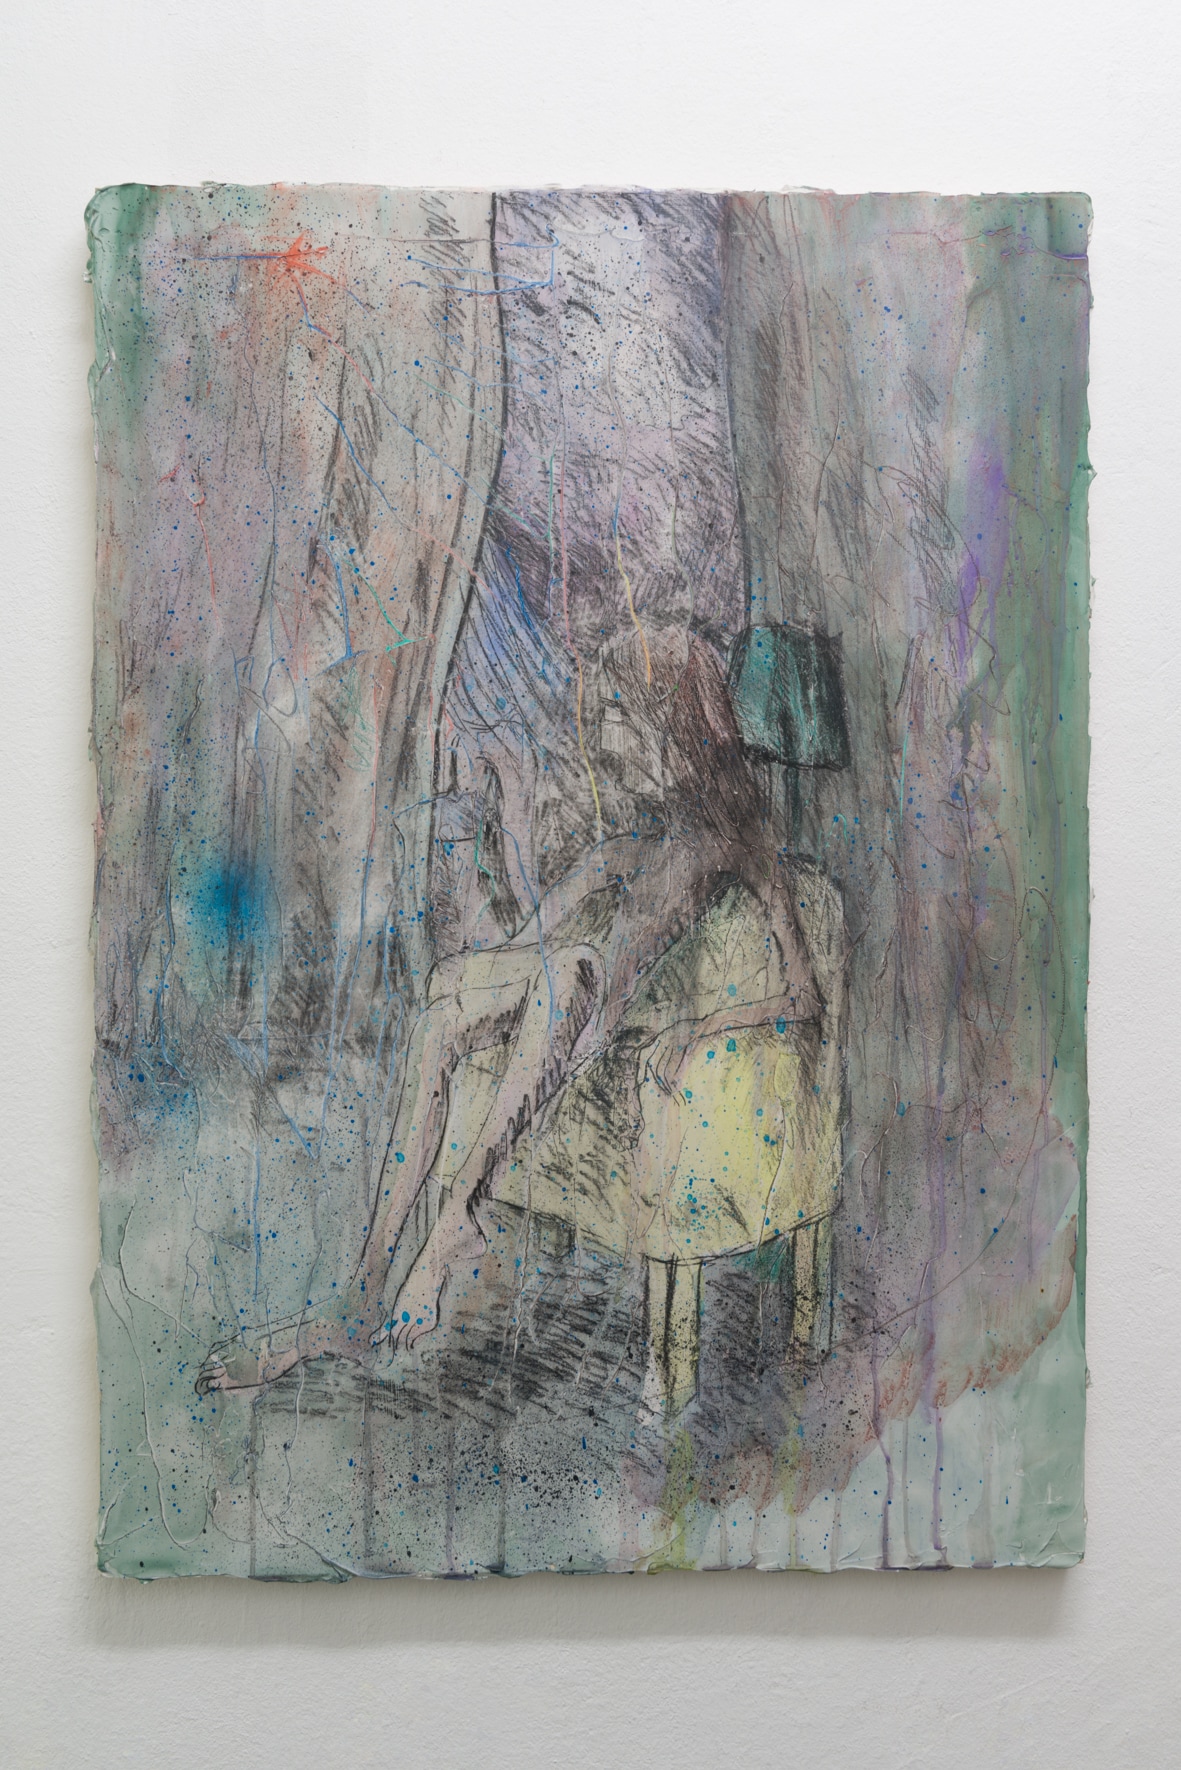 Emi Mizukami, The bottom of the night, Acrylic and graphite on canvas, 91 x 65 cm, 2020